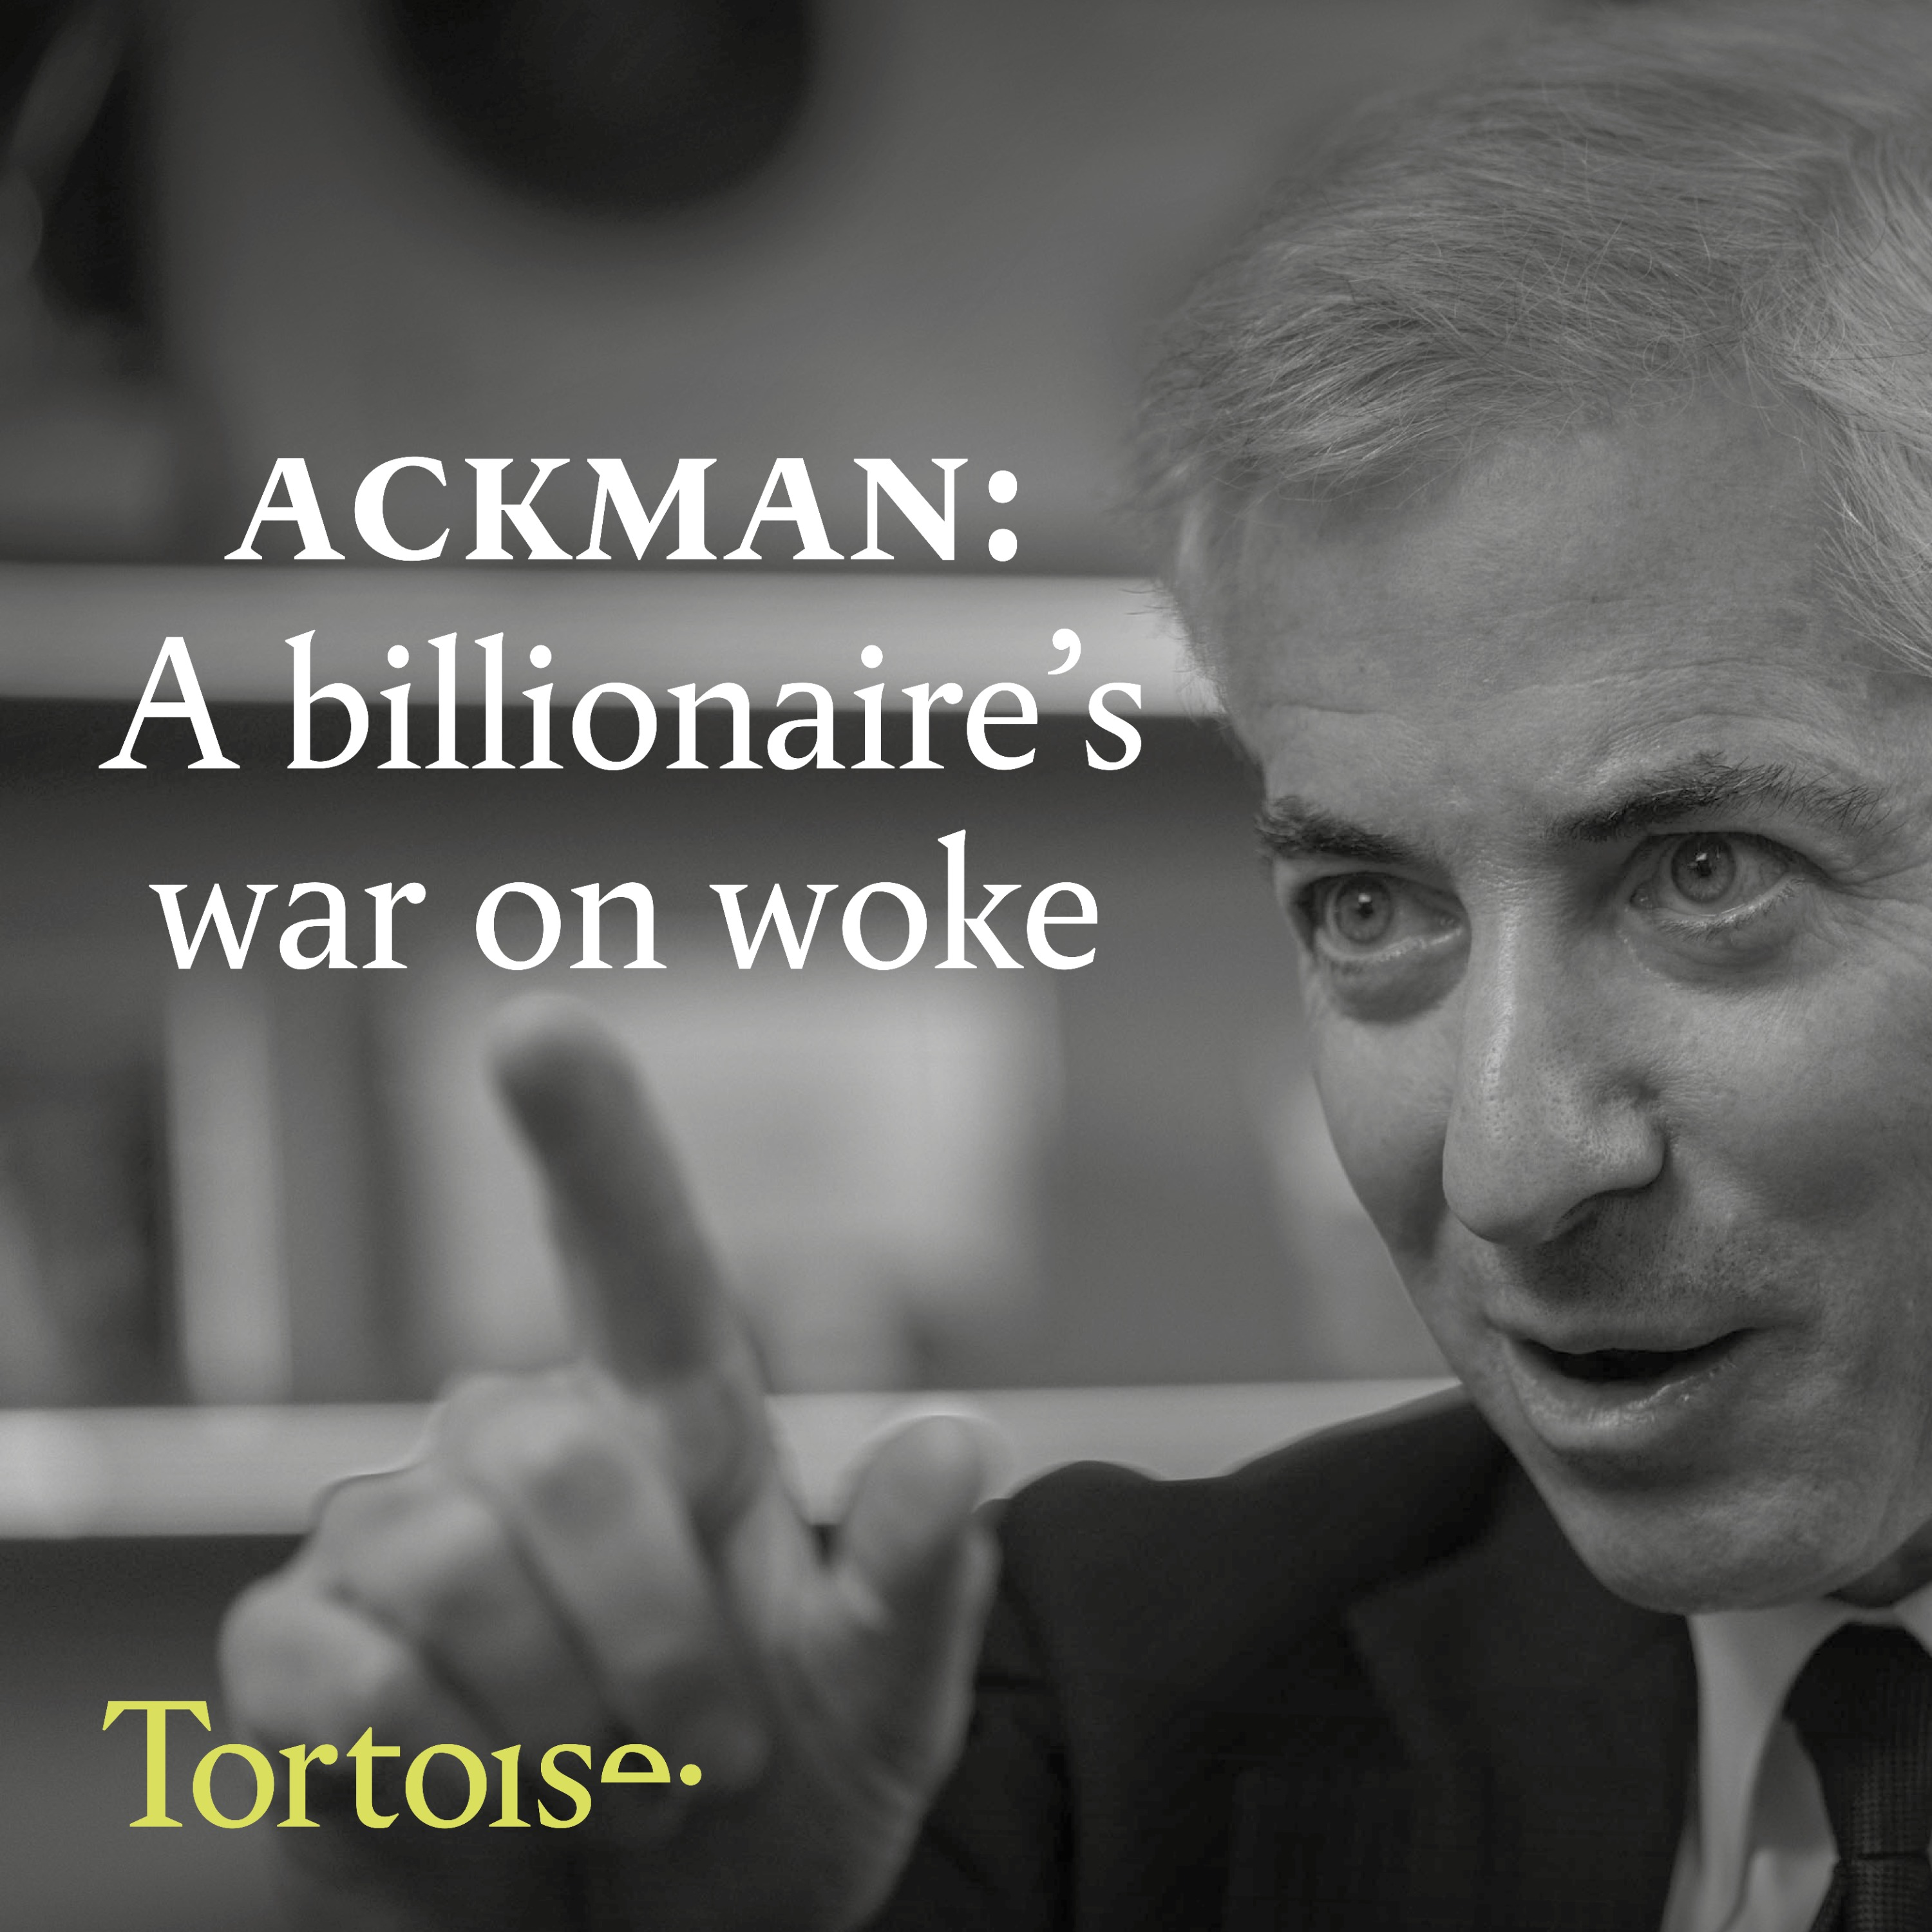 Ackman: A billionaire’s war on woke